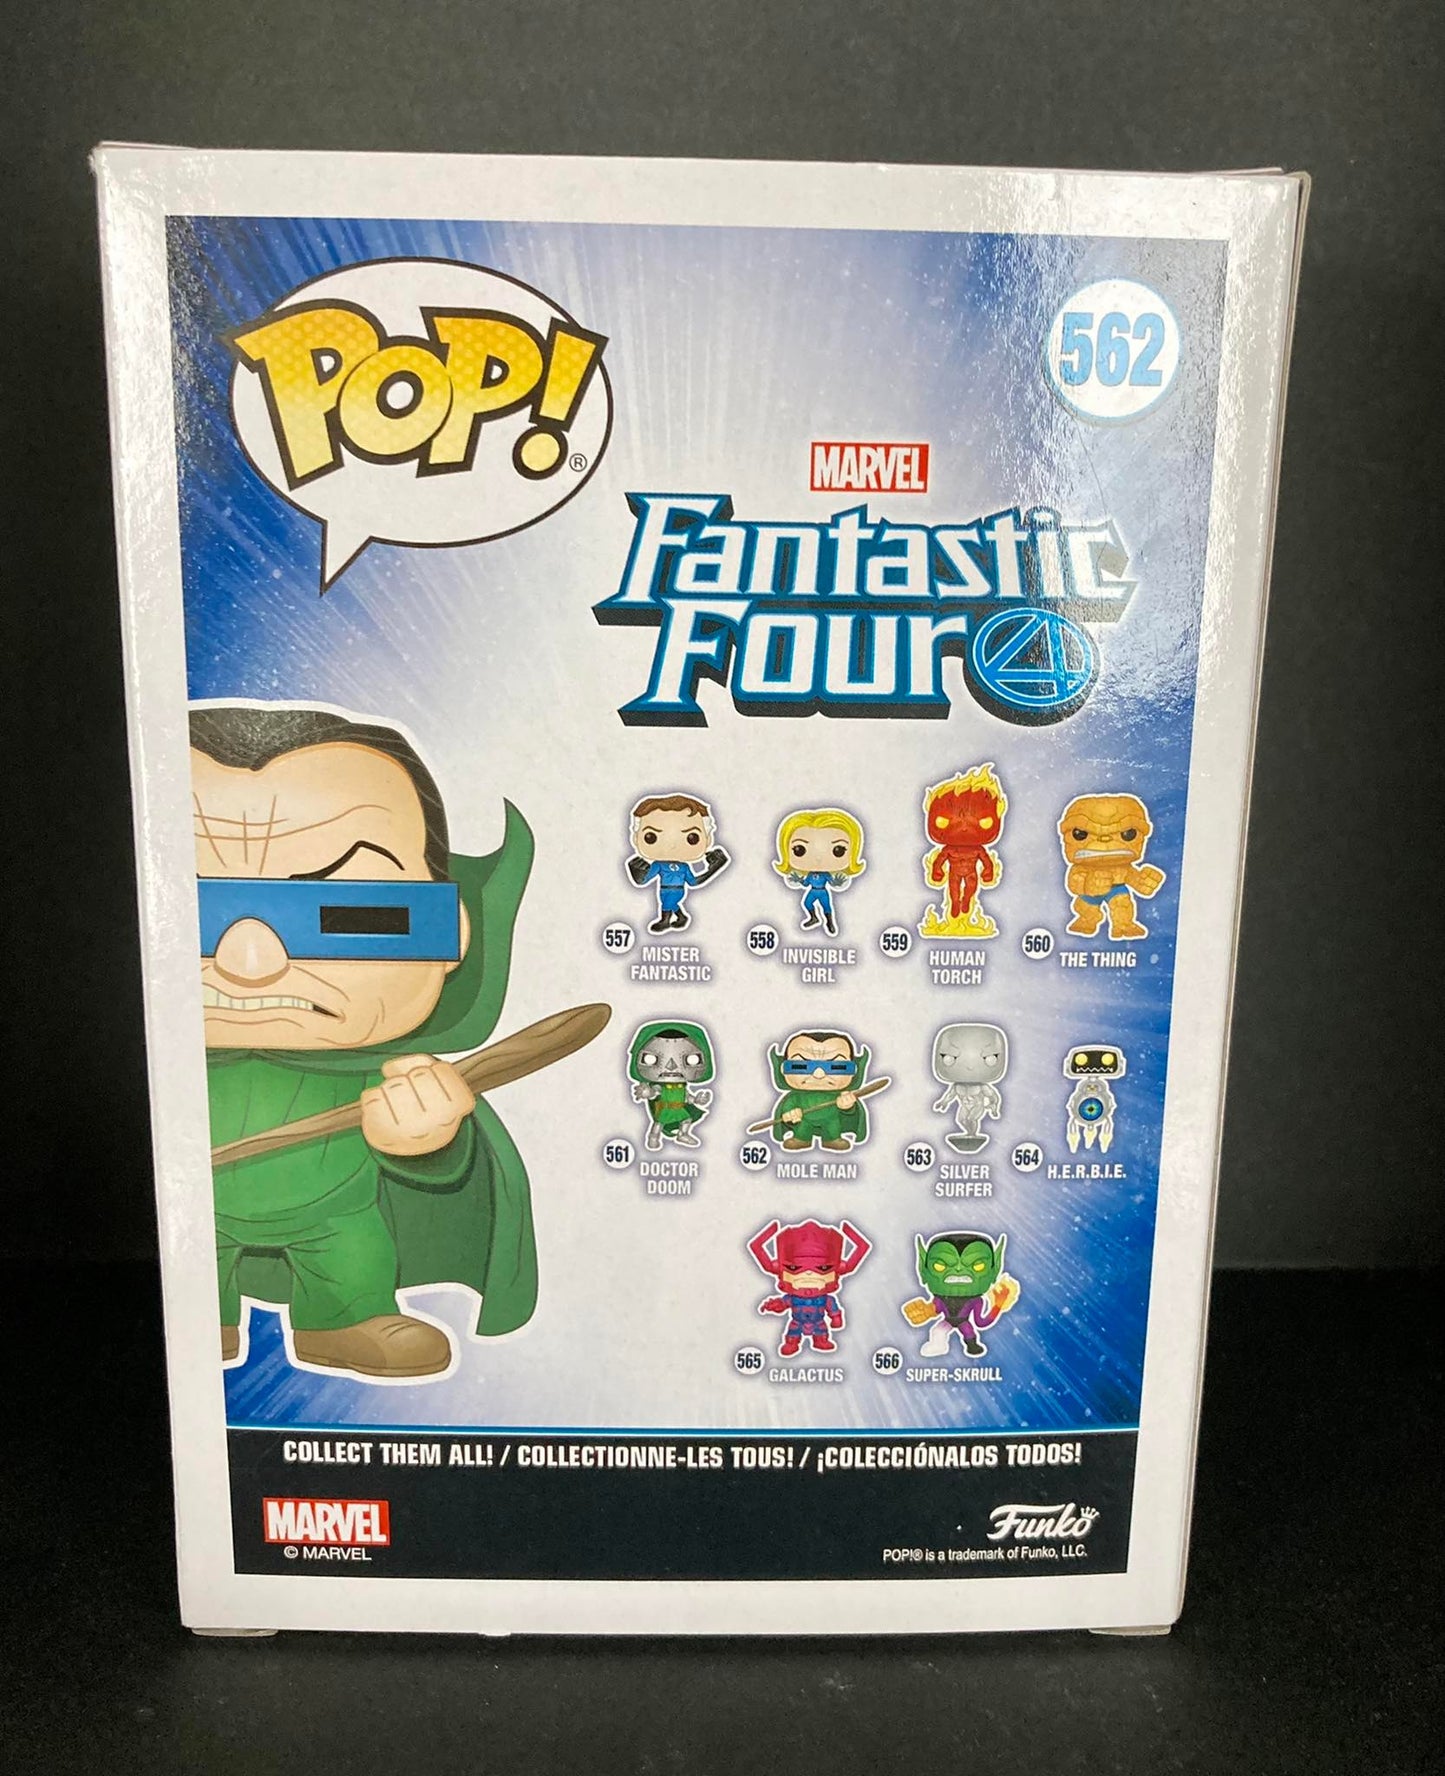 Fantastic Four Pop Figure [Marvel] #562 Mole Man